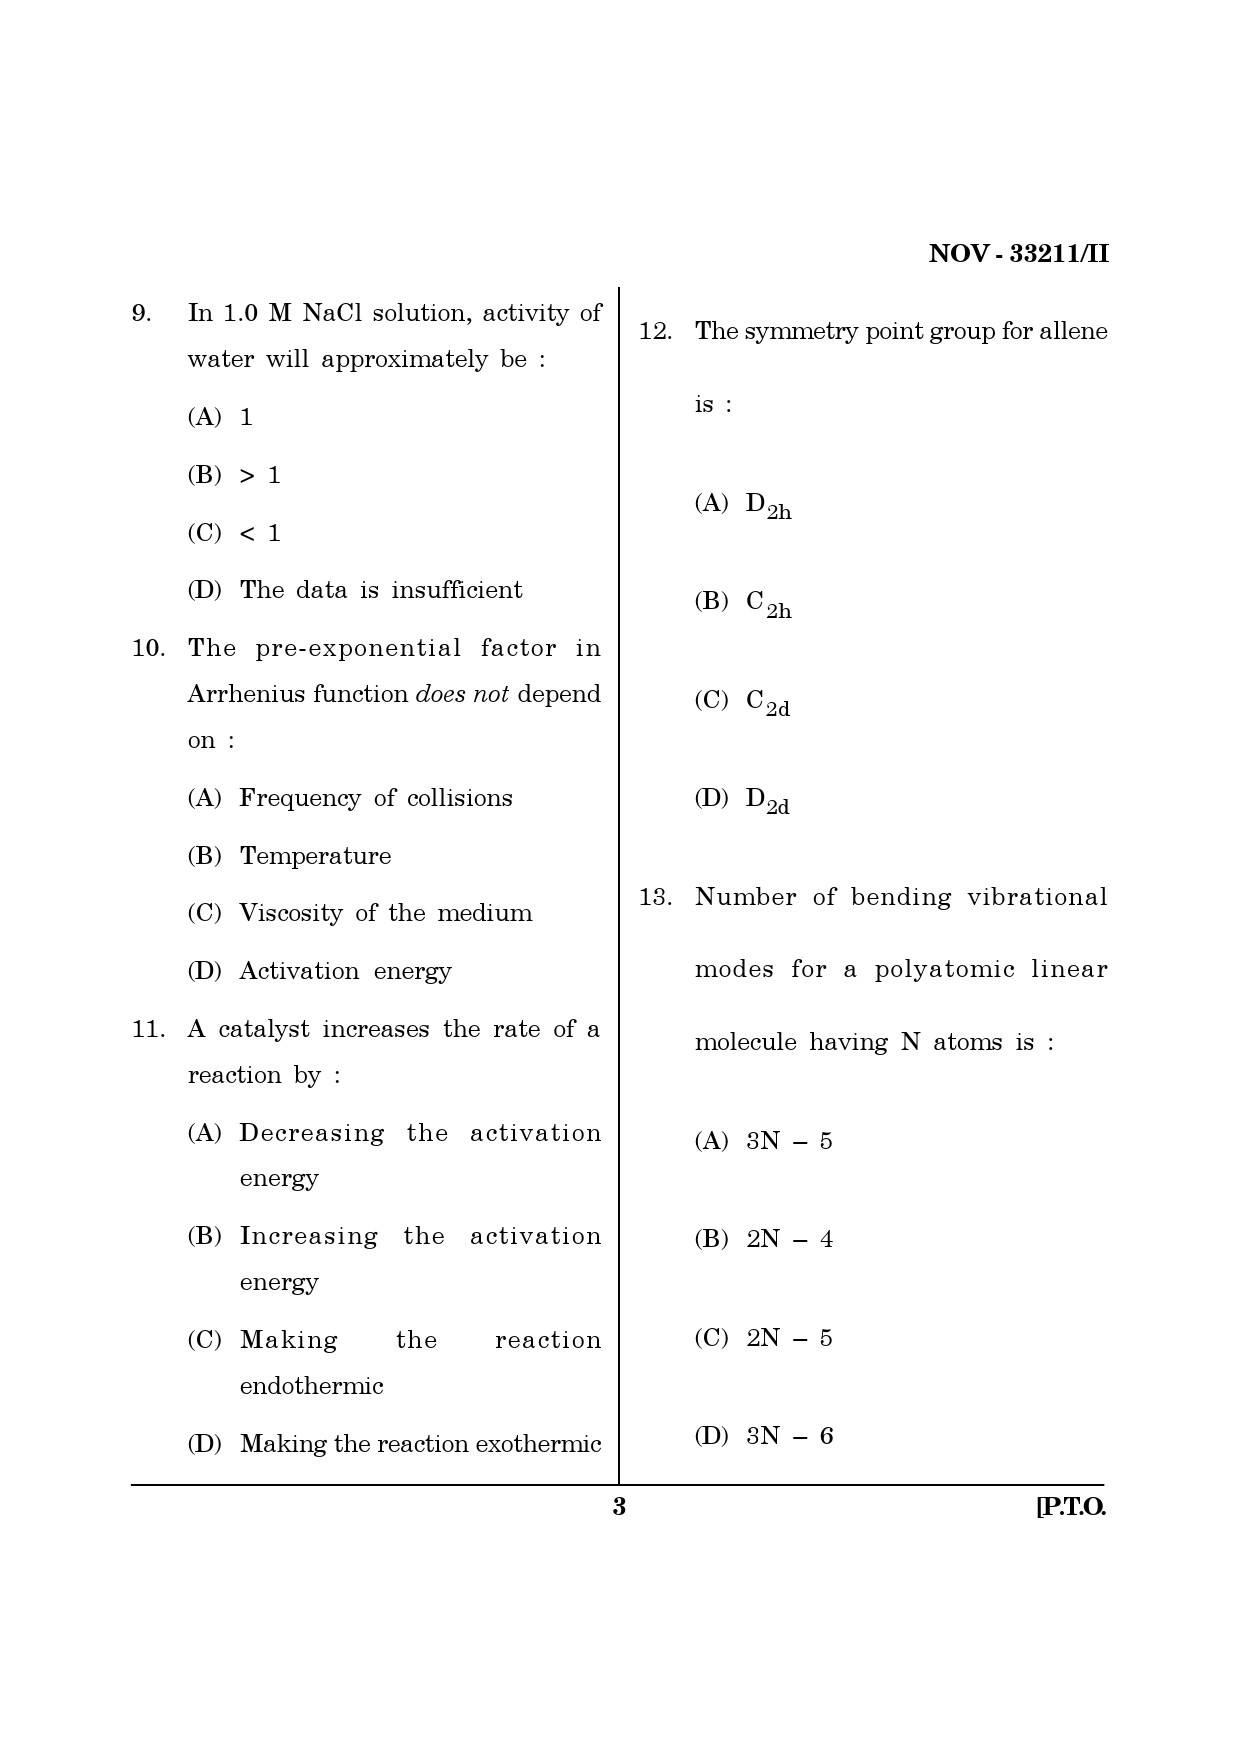 Maharashtra SET Chemical Sciences Question Paper II November 2011 3